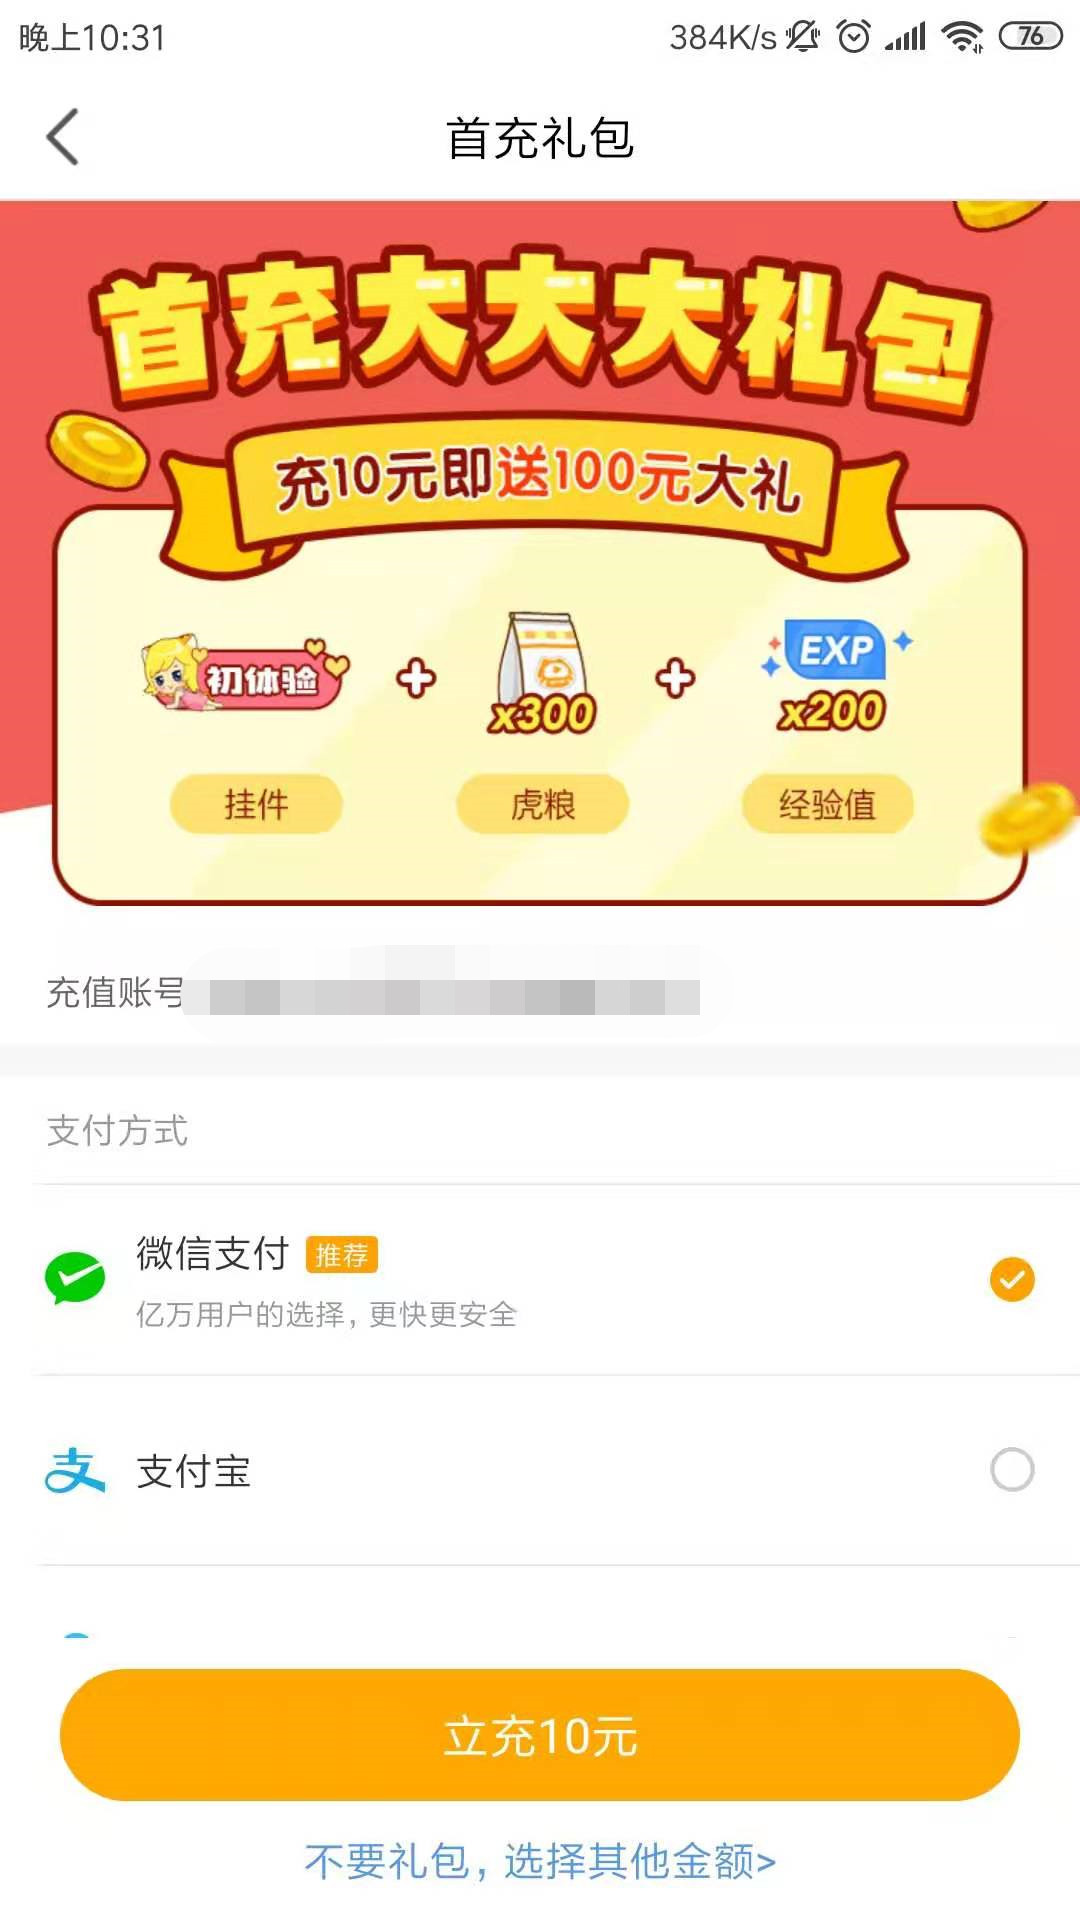 Lol竞彩app 直播平台虎牙 是怎么千方百计让你付费